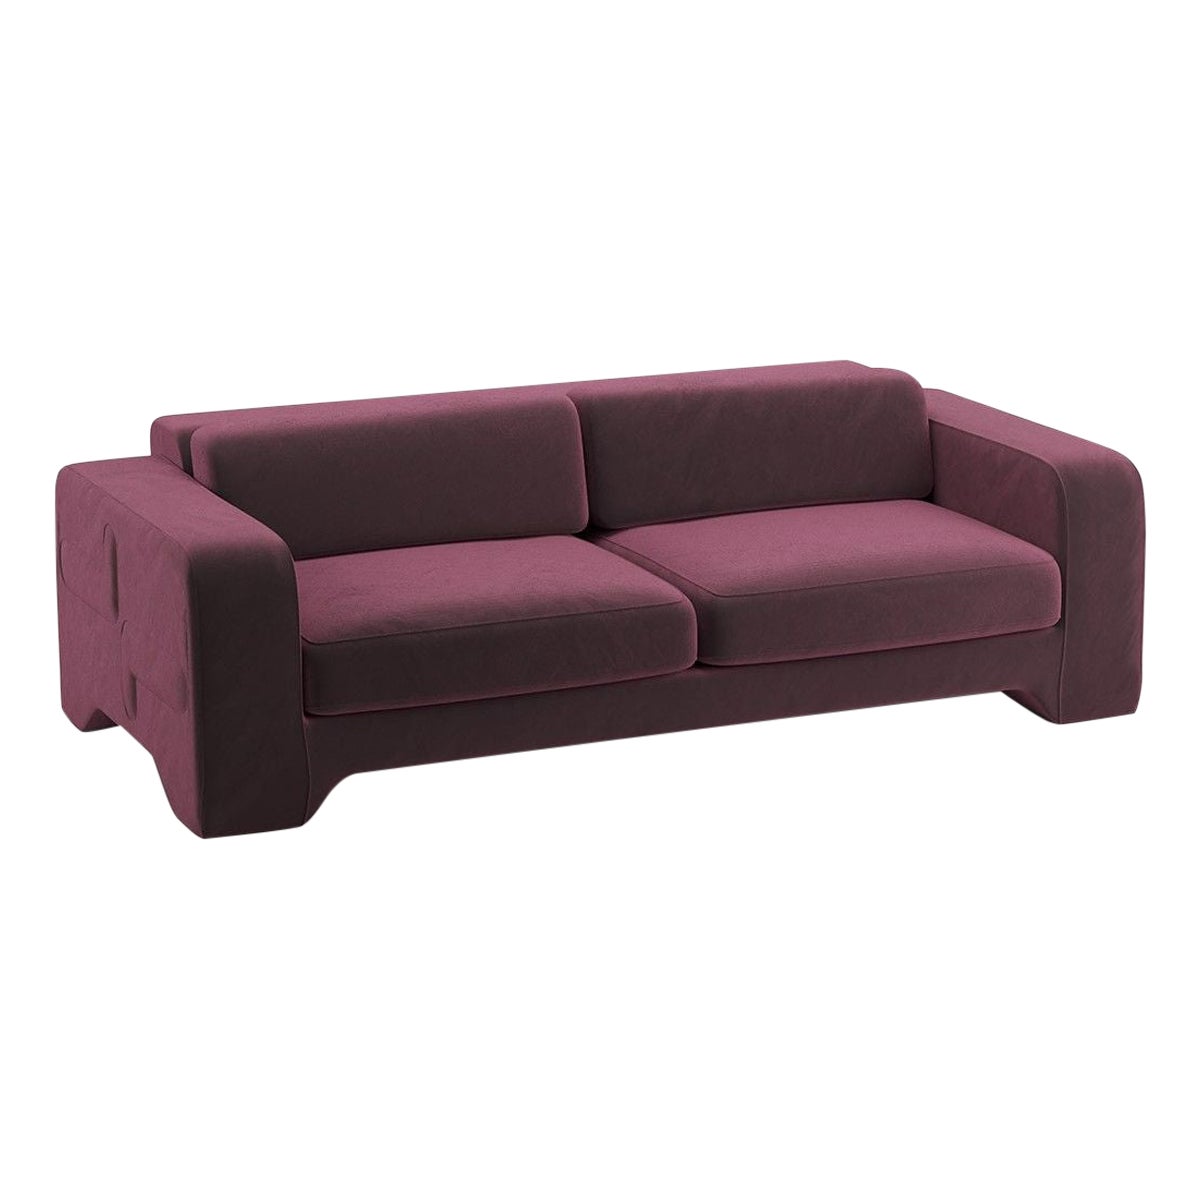 Popus Editions Giovanna 4 Seater Sofa in Bordeaux Burgundy Como Velvet Fabric For Sale